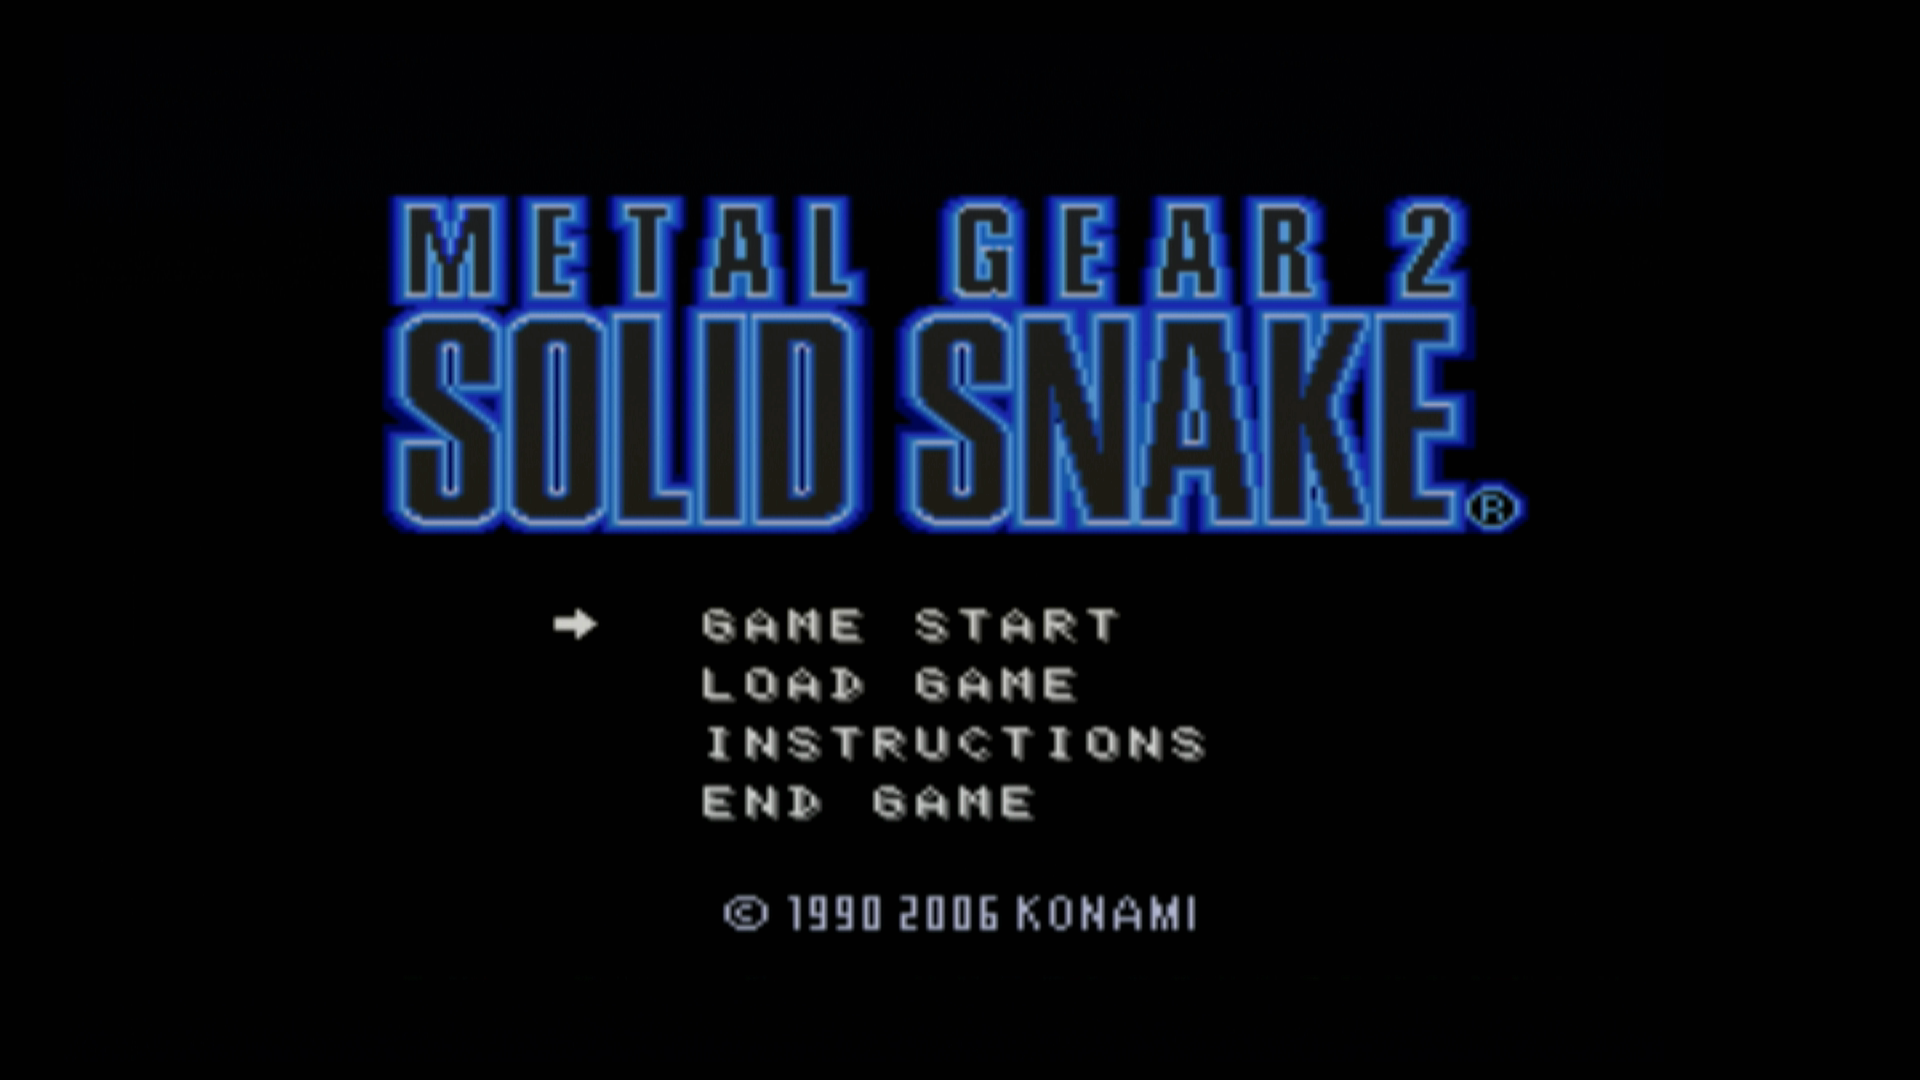 METAL GEAR & METAL GEAR 2: Solid Snake Achievements @ Gamertag Nation